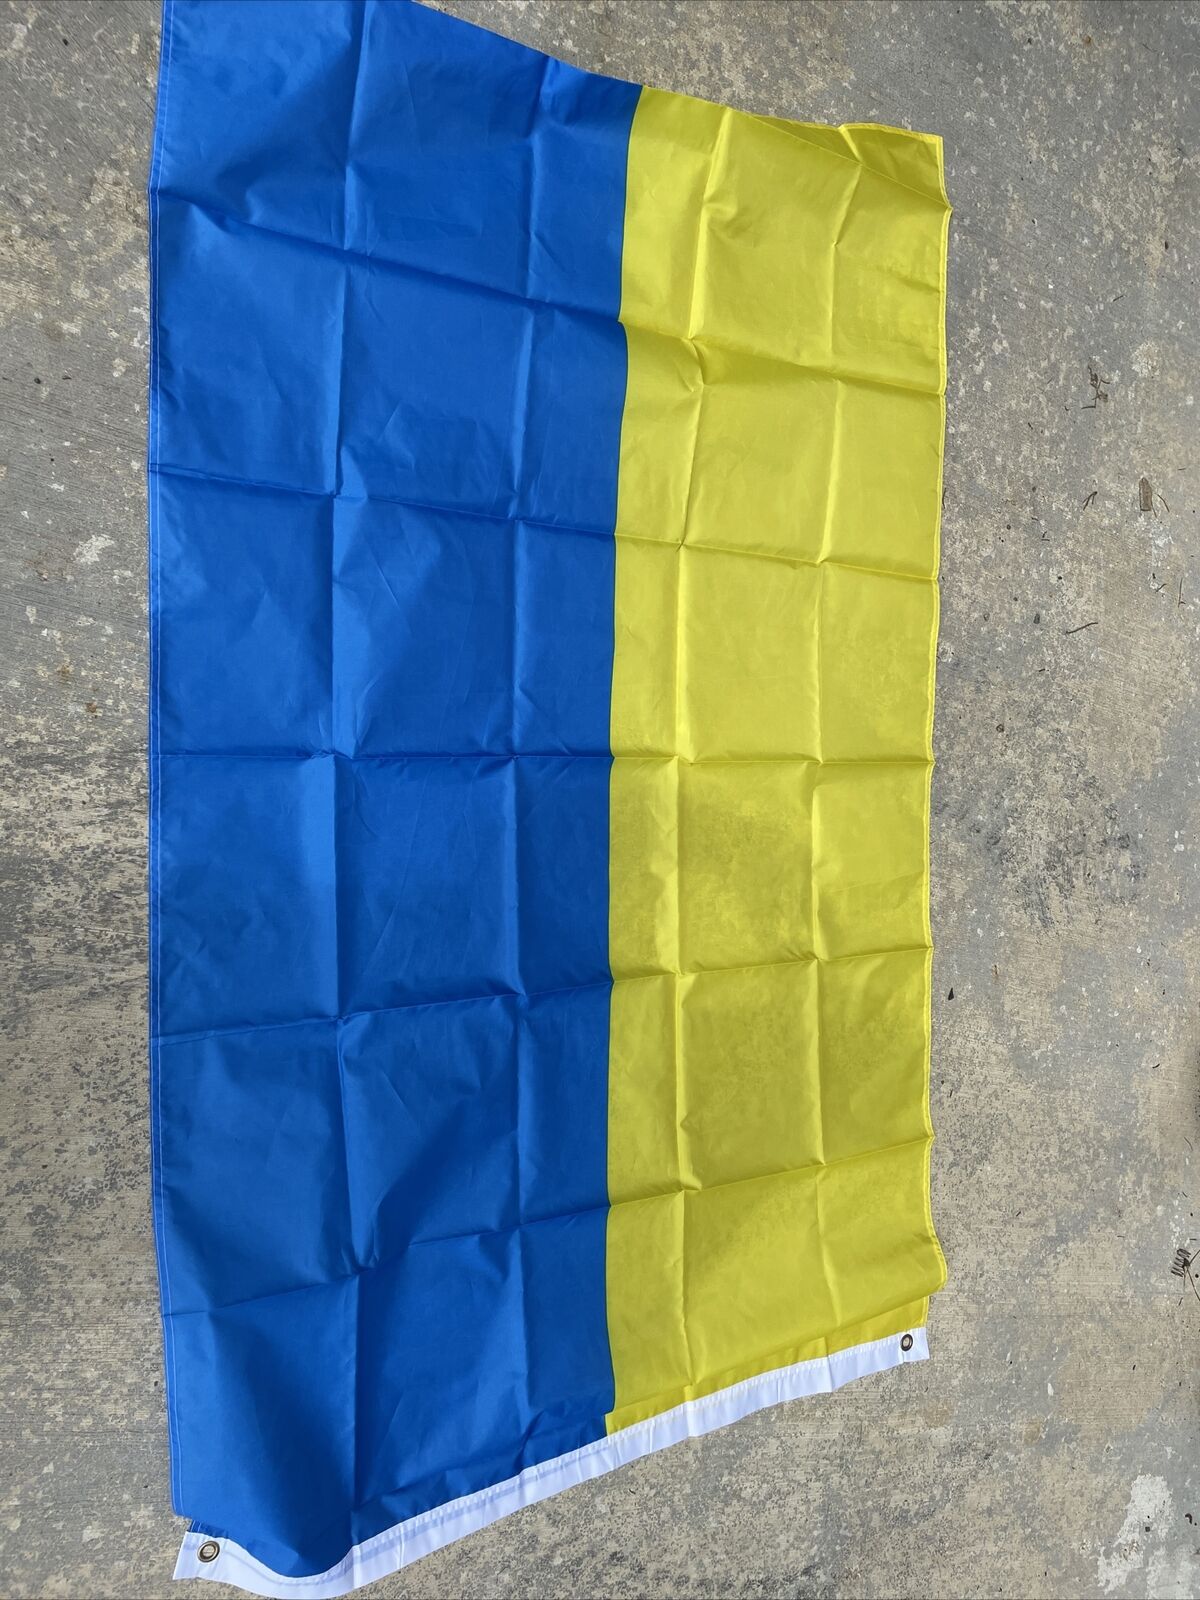 Anley Fly Breeze 3x5 Foot Ukraine Flag - Ukrainian National Flags Polyester